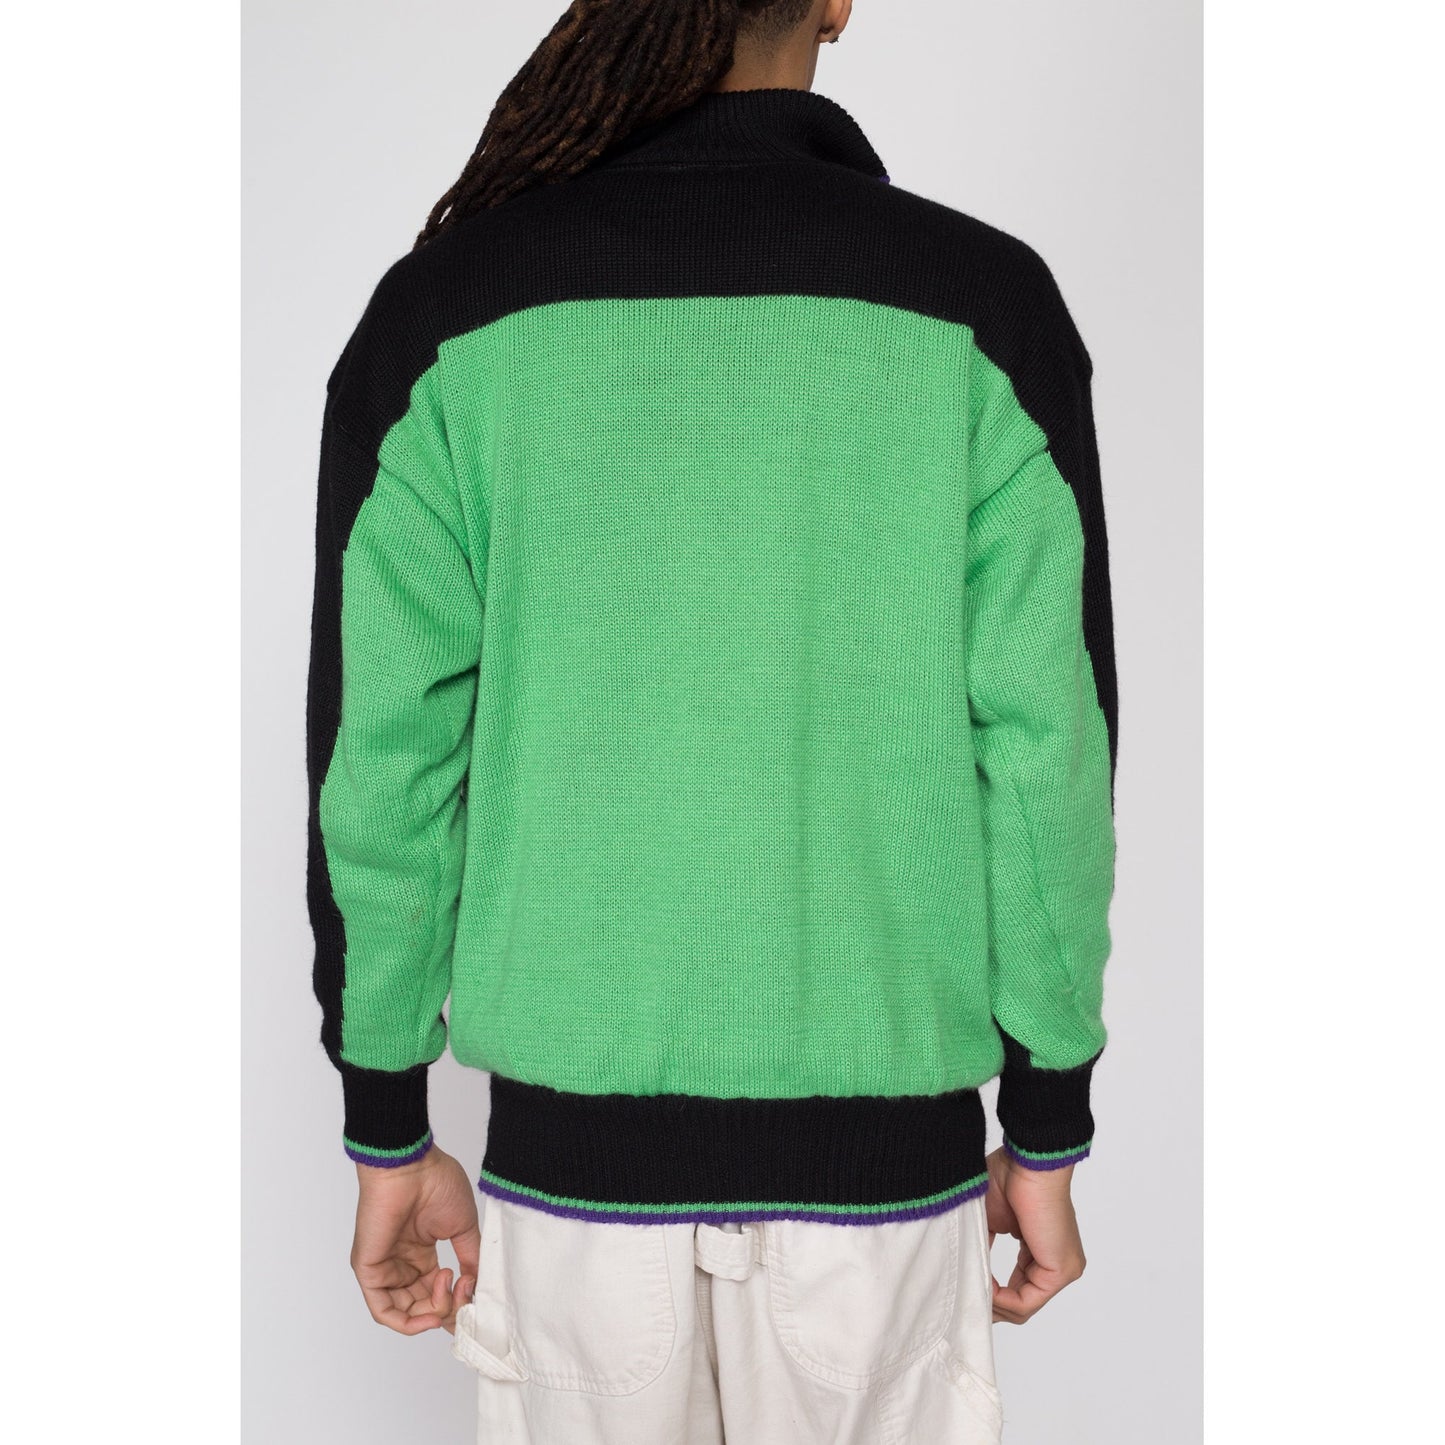 Medium 80s Black & Green Color Block White Stag Ski Sweater | Vintage Lined Knit Pullover Jumper